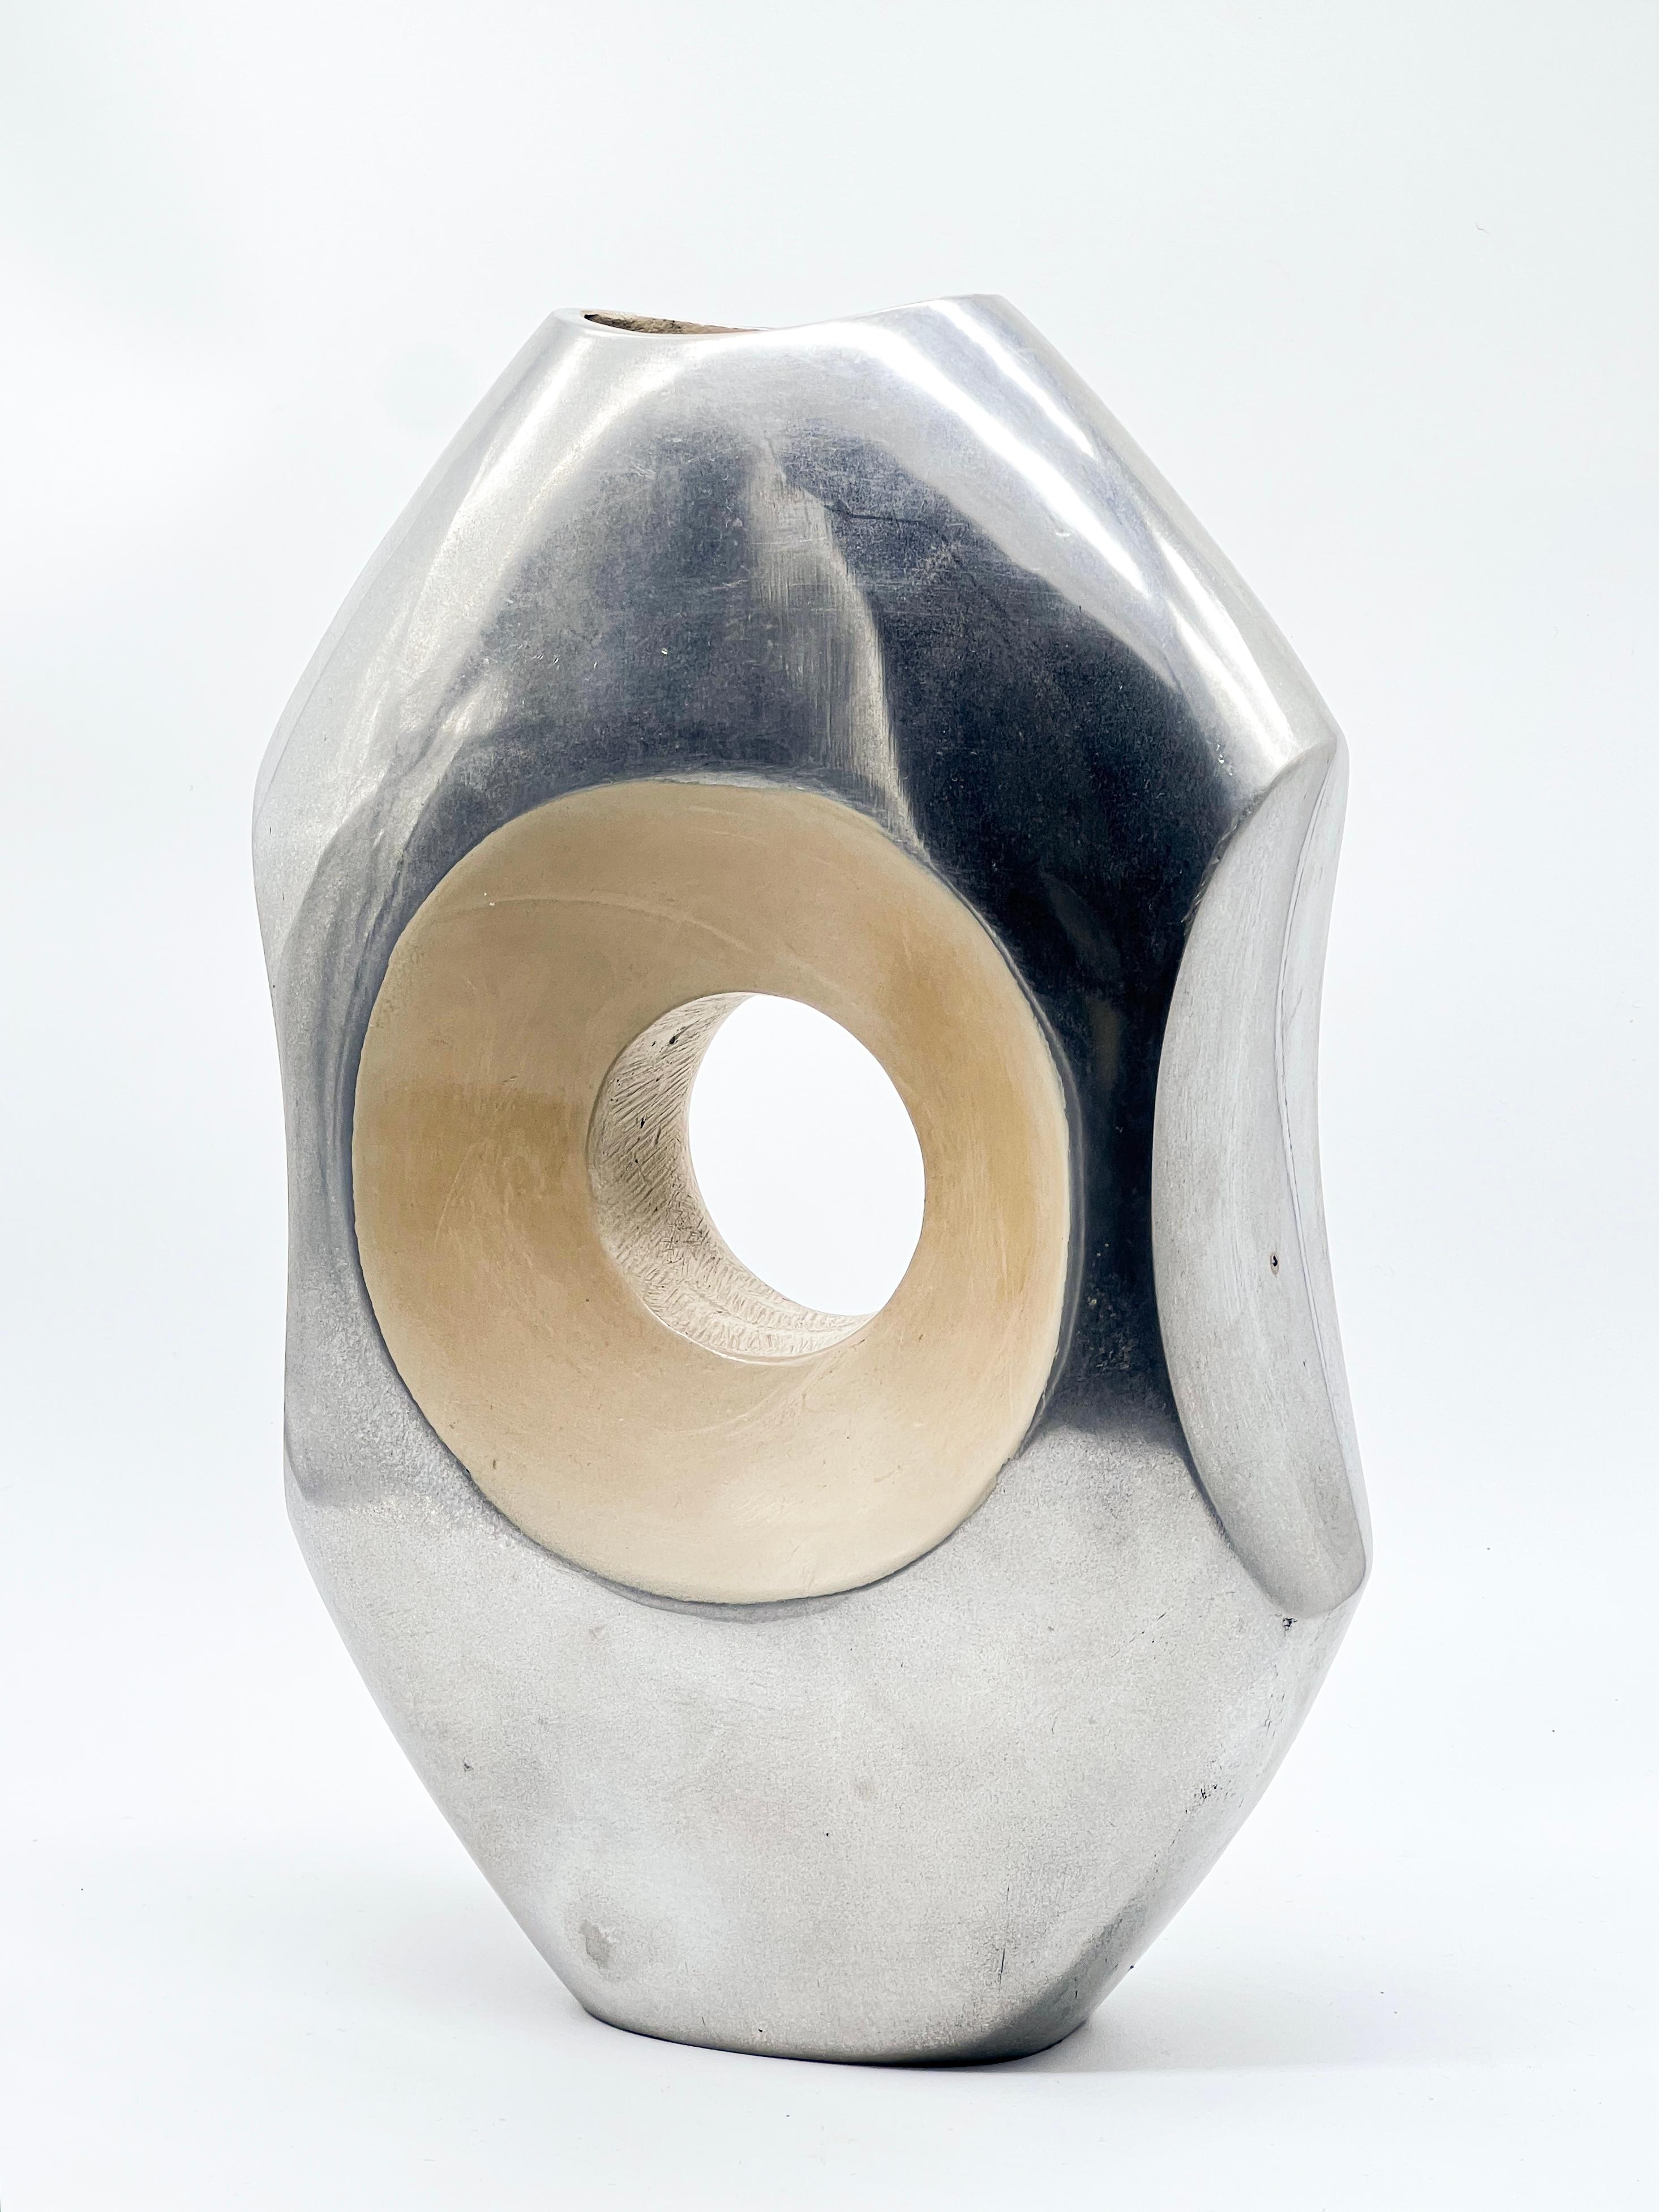 Big Sculptural Space Age Vase, Cast Aluminium, Italian Collectible Decorative For Sale 1